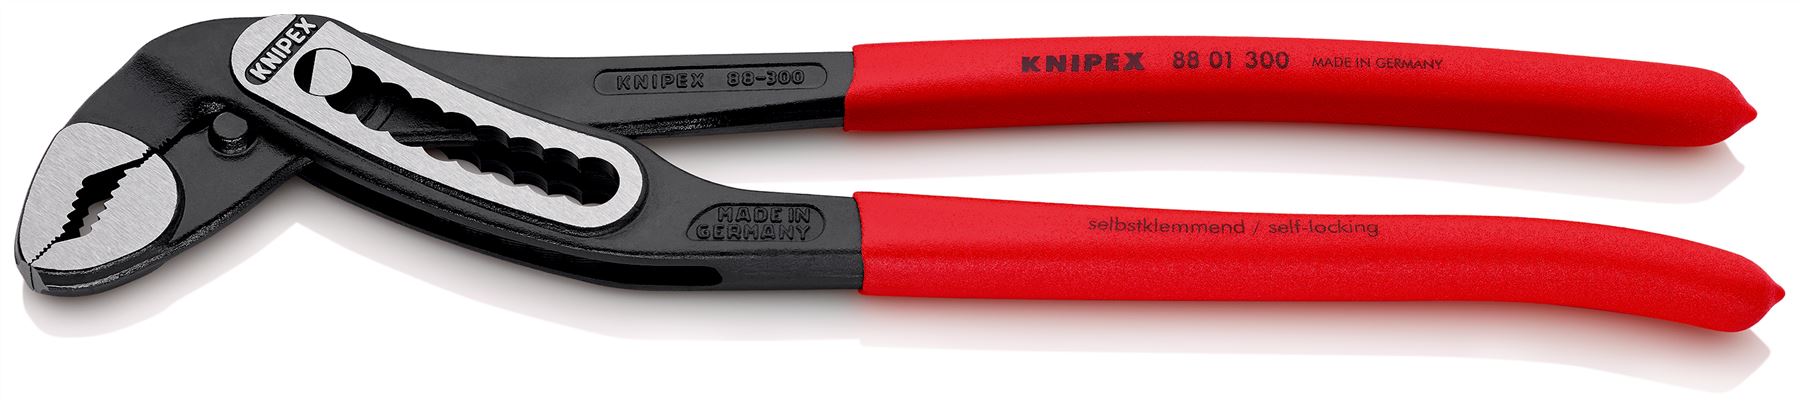 KNIPEX Alligator Water Pump Pliers 300mm Plastic Coated Handles Non Slip 88 01 300 SB